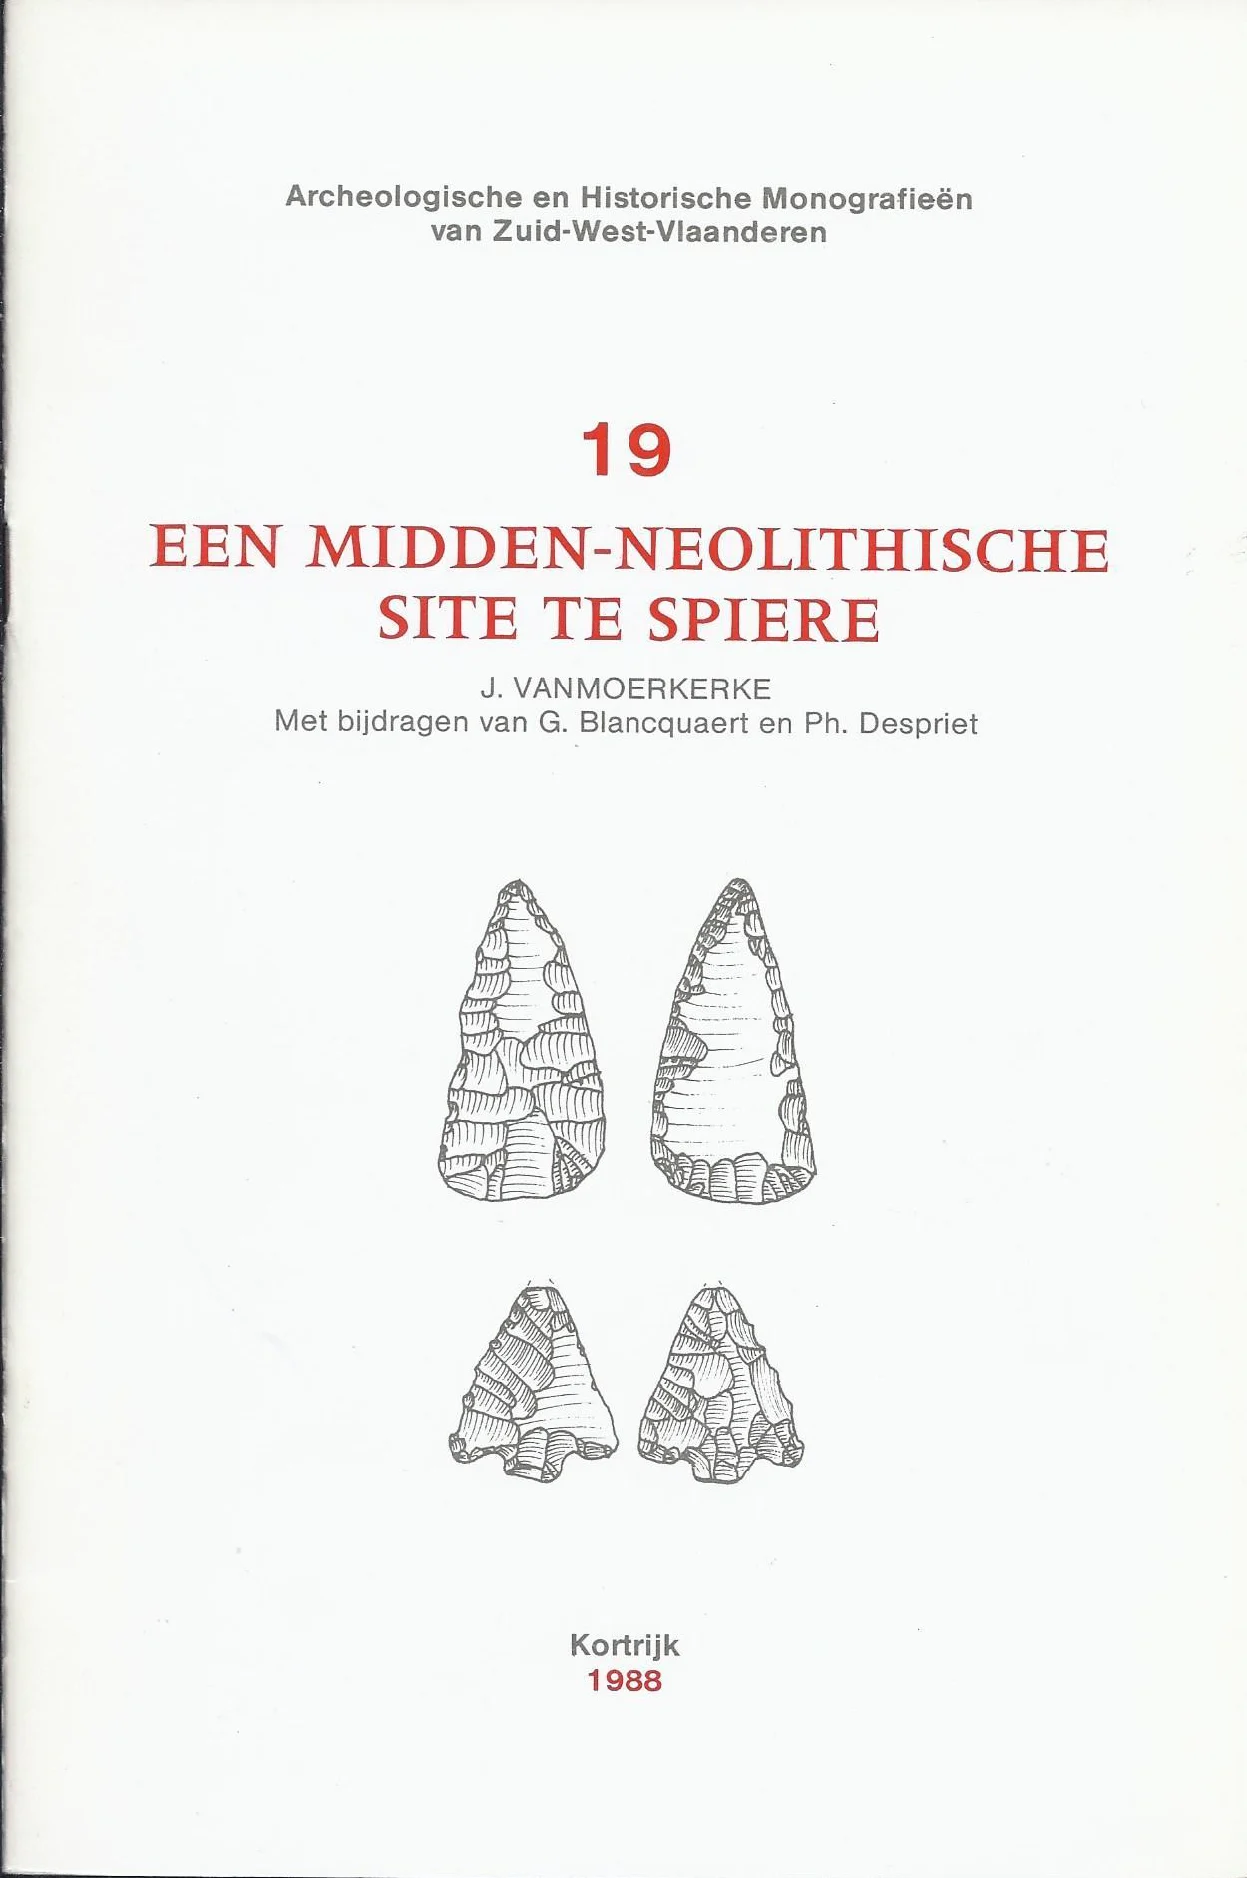 Dia Voorstelling Archeologie ZWVL Boeken Page 019 Image 0001